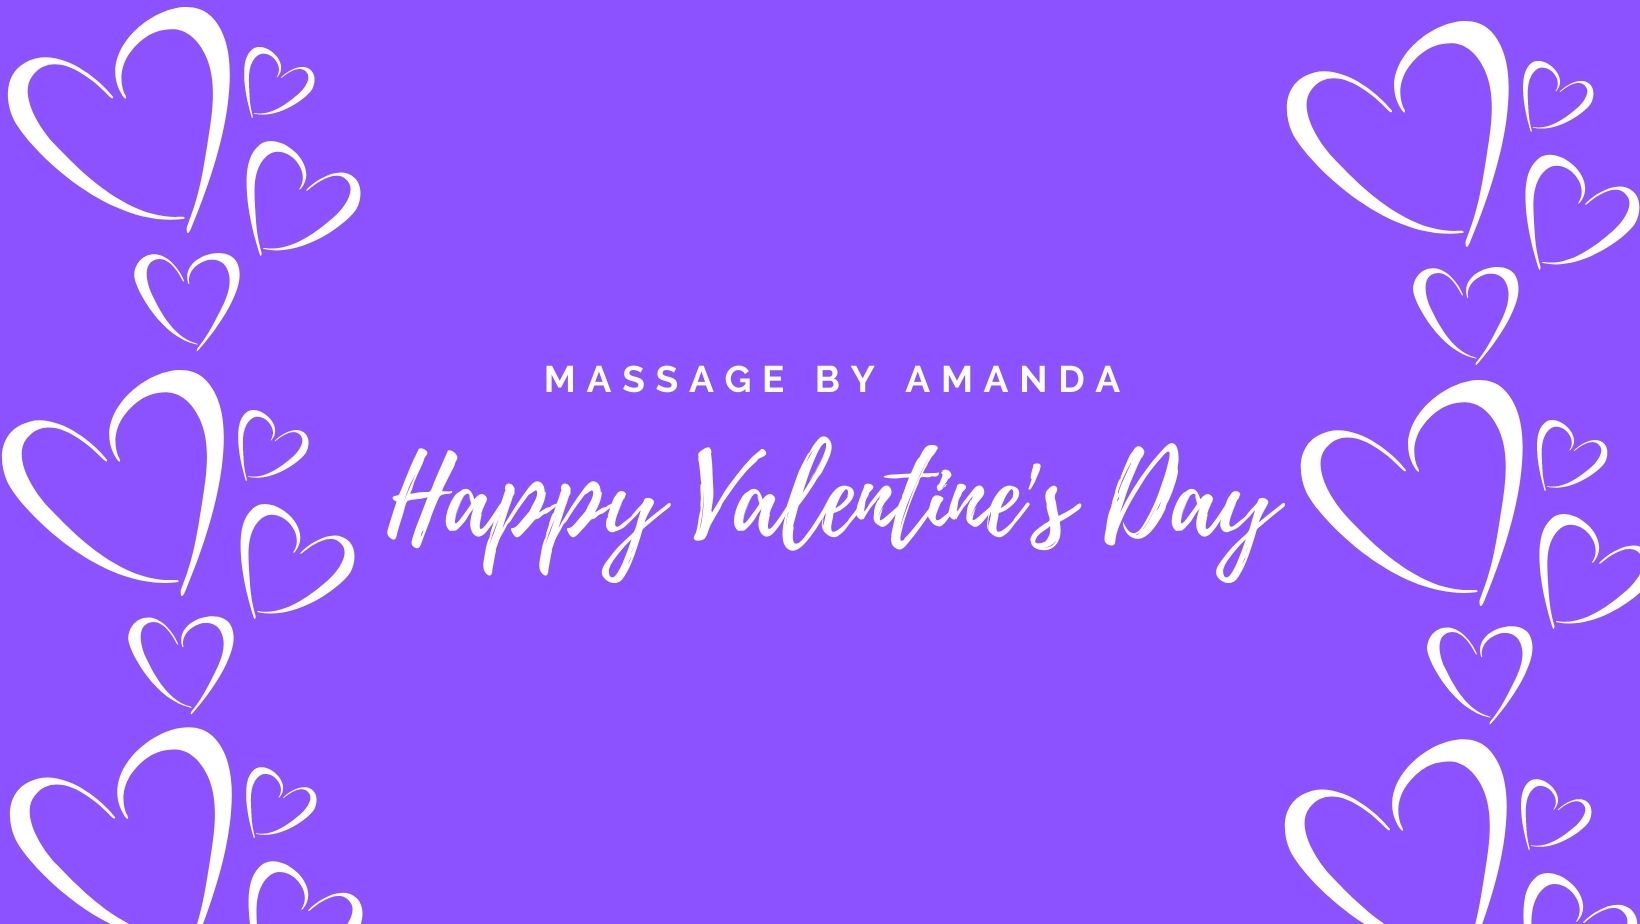 Massage by Amanda, Amanda Miles LMT